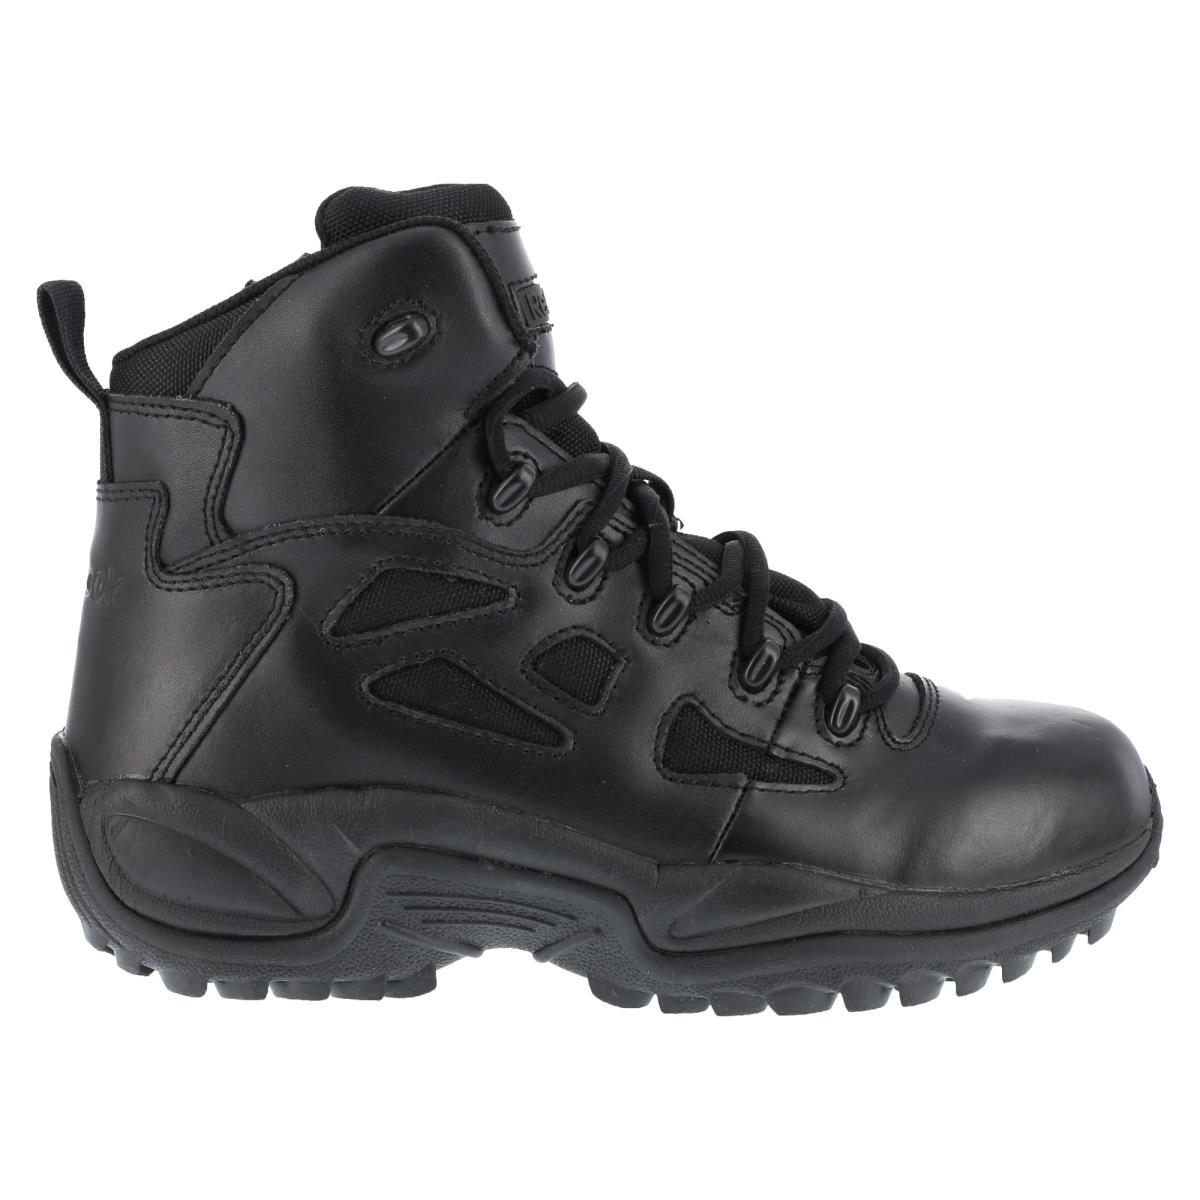 Reebok Mens Black Leather Work Boots Rapid Response Stealth 6 M